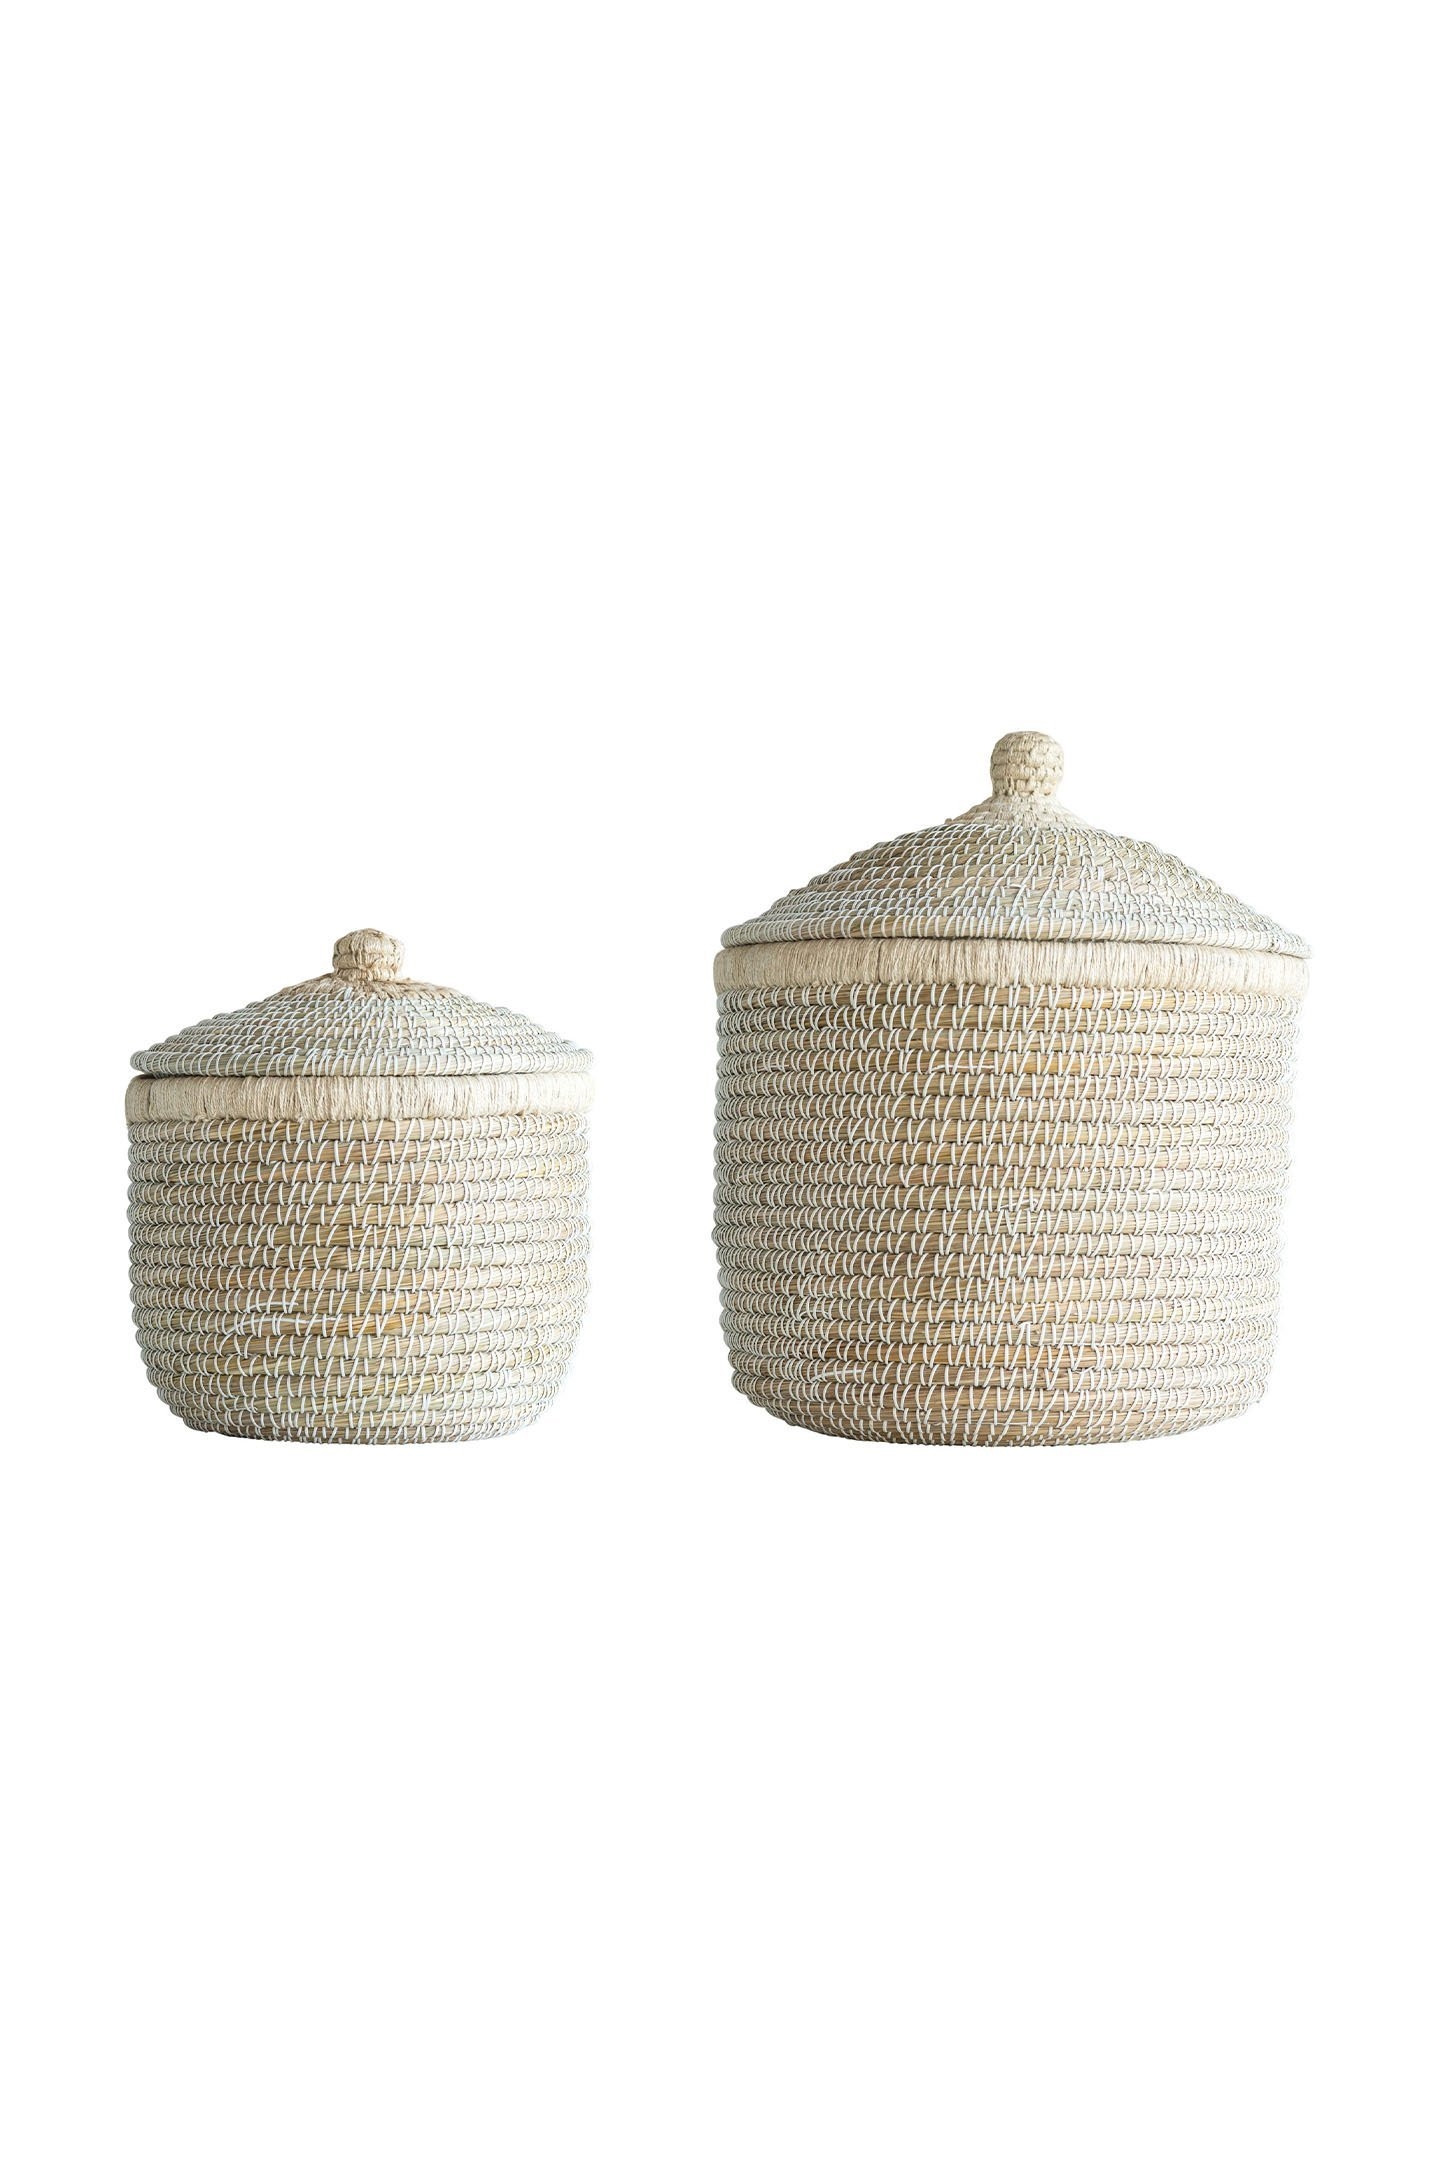 Lyla Baskets, Set of 2 - Image 0